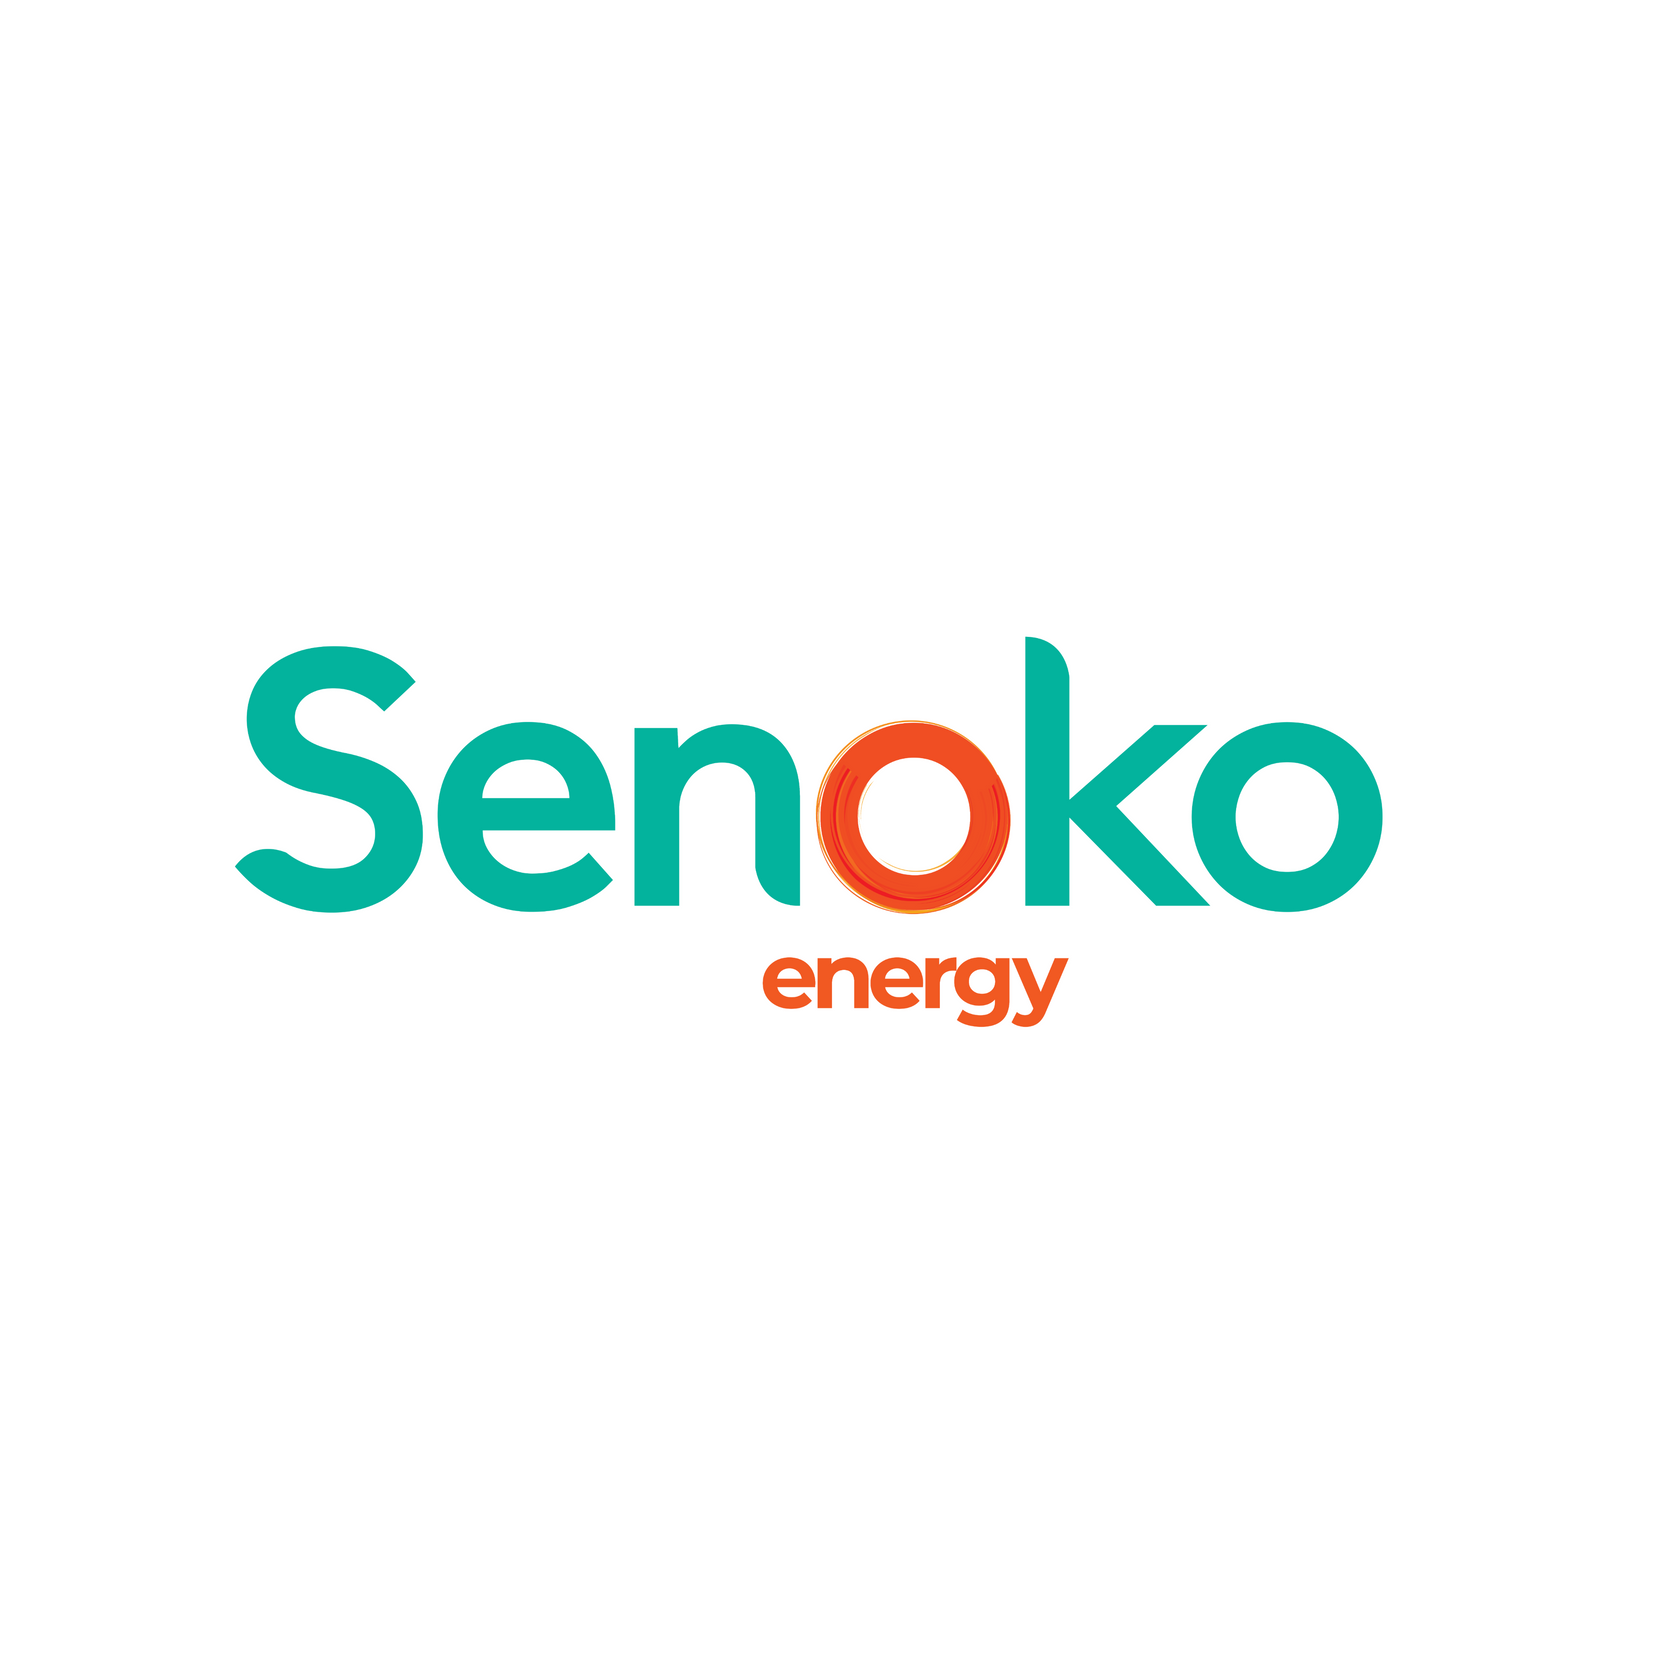 Sg senoko energy